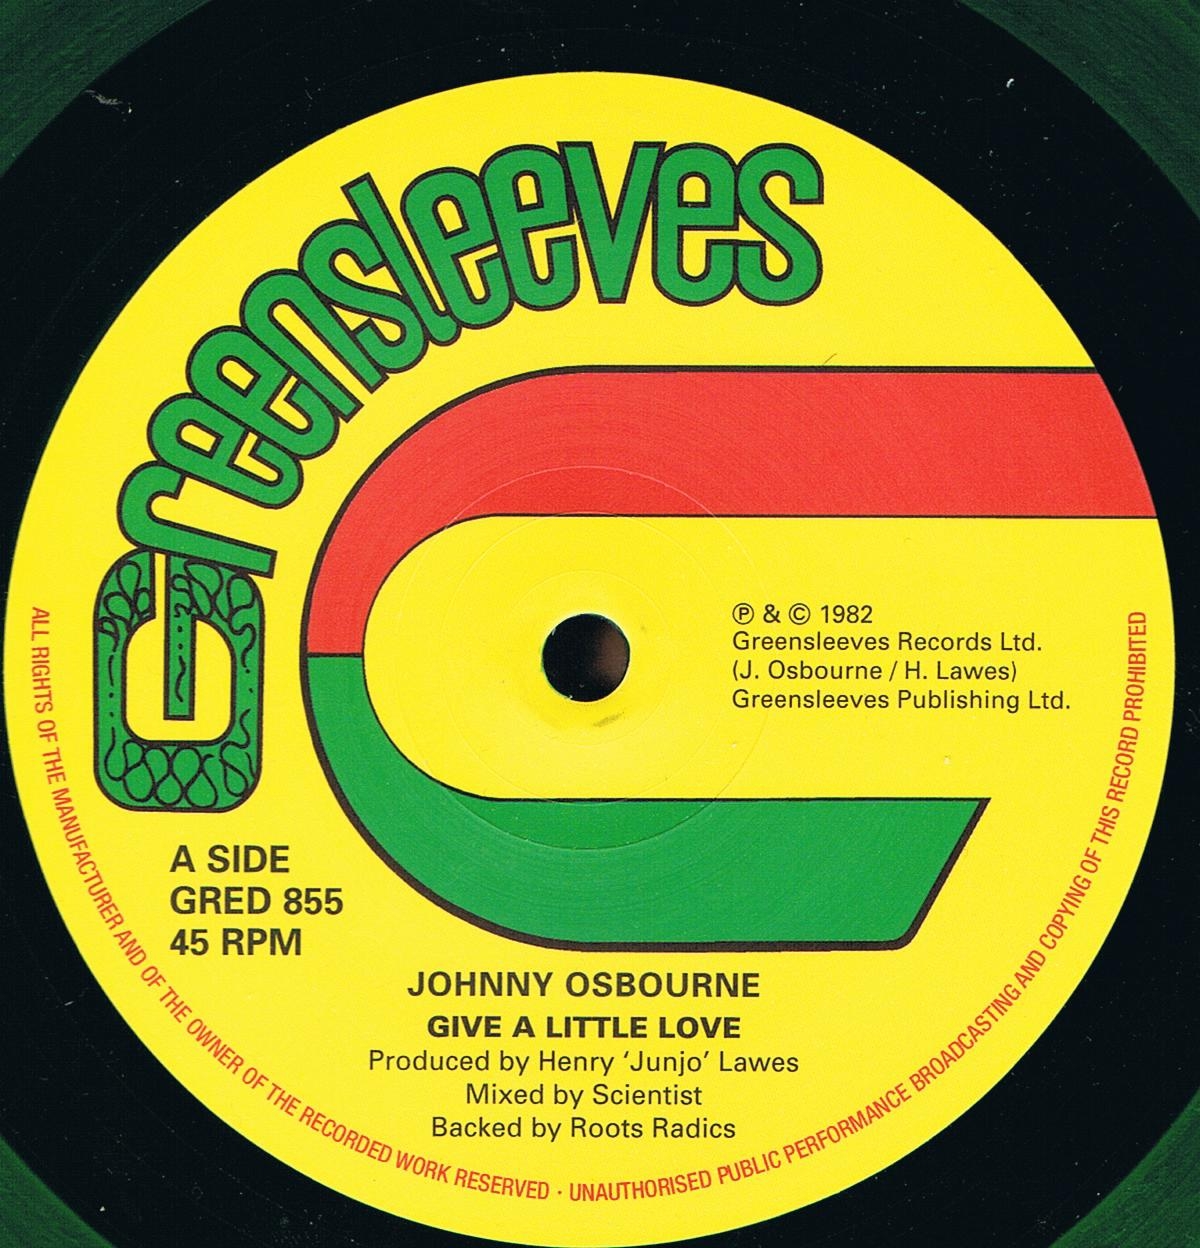 Johnny Osbourne - Give A Little Love / Roots Radics - Give A Little Dub (12")